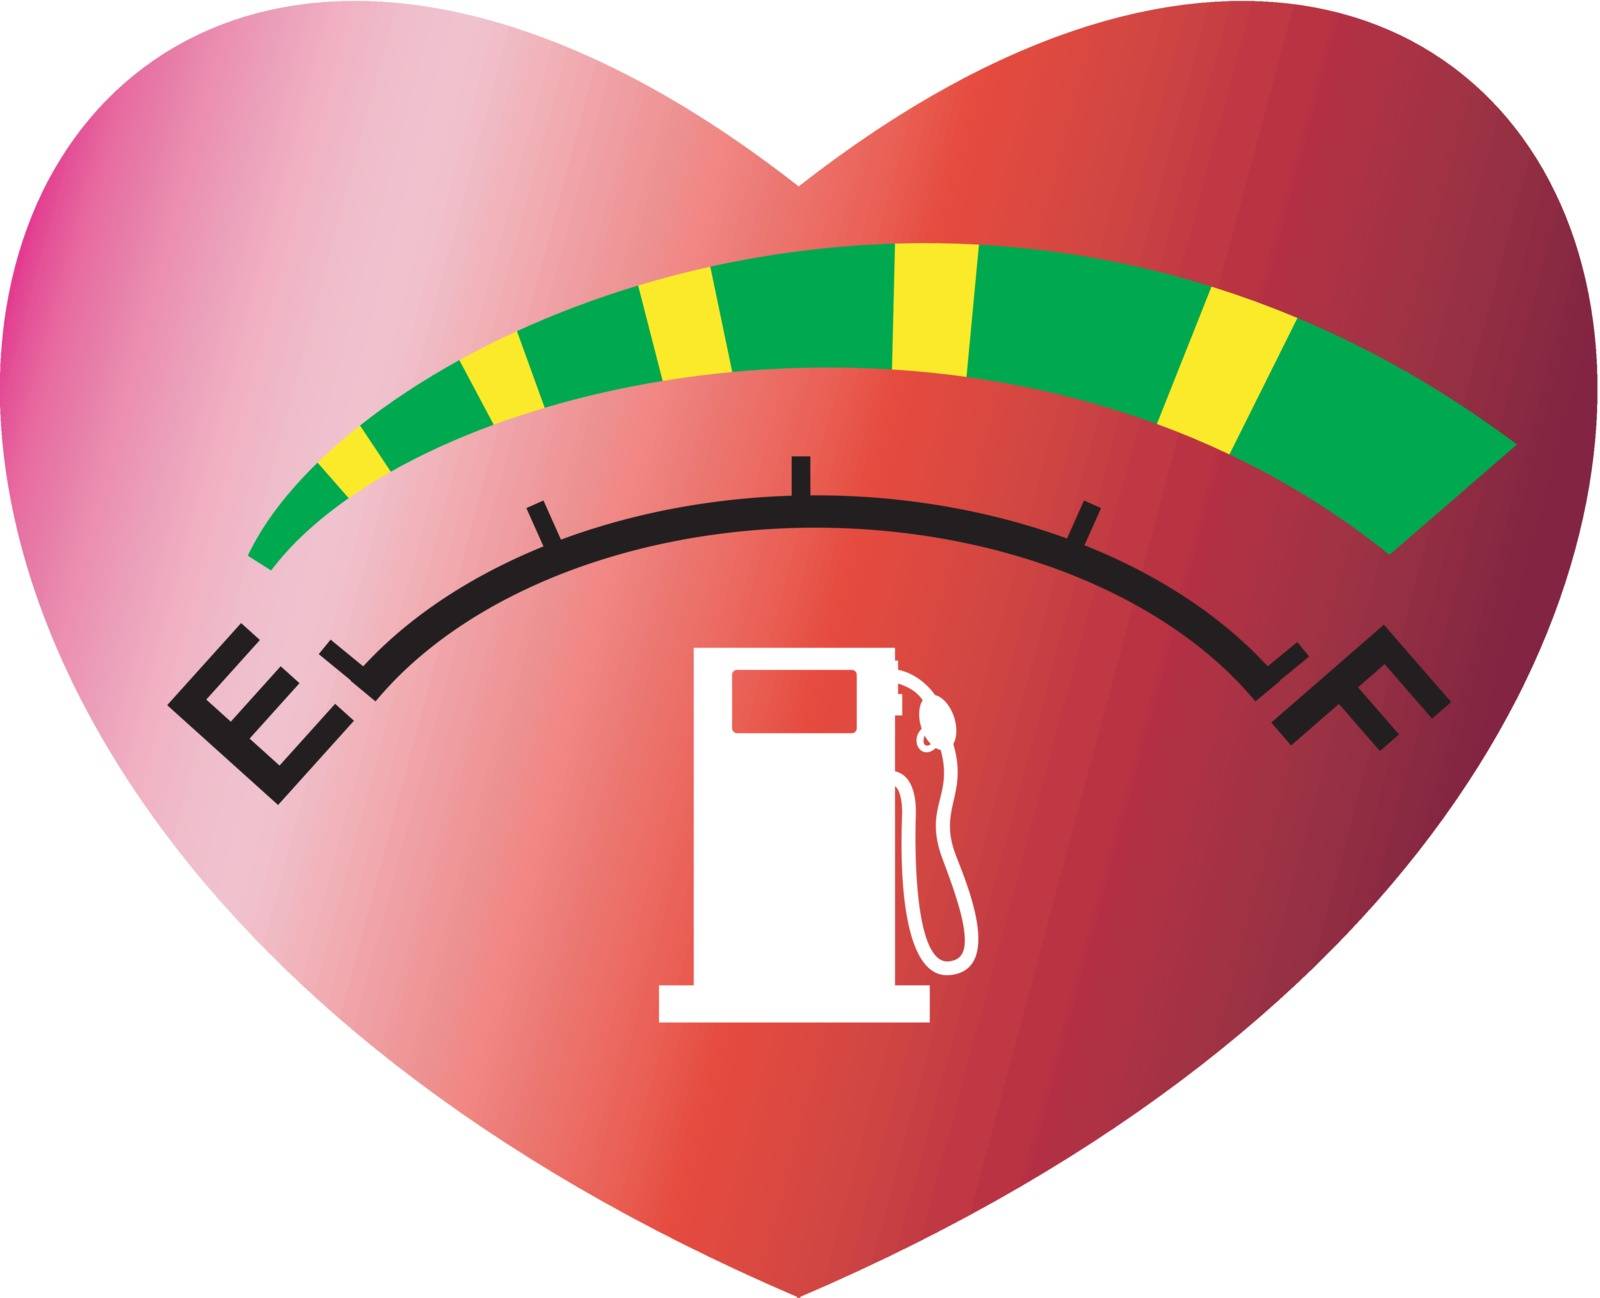 fuel gage meter heart shape by patrimonio